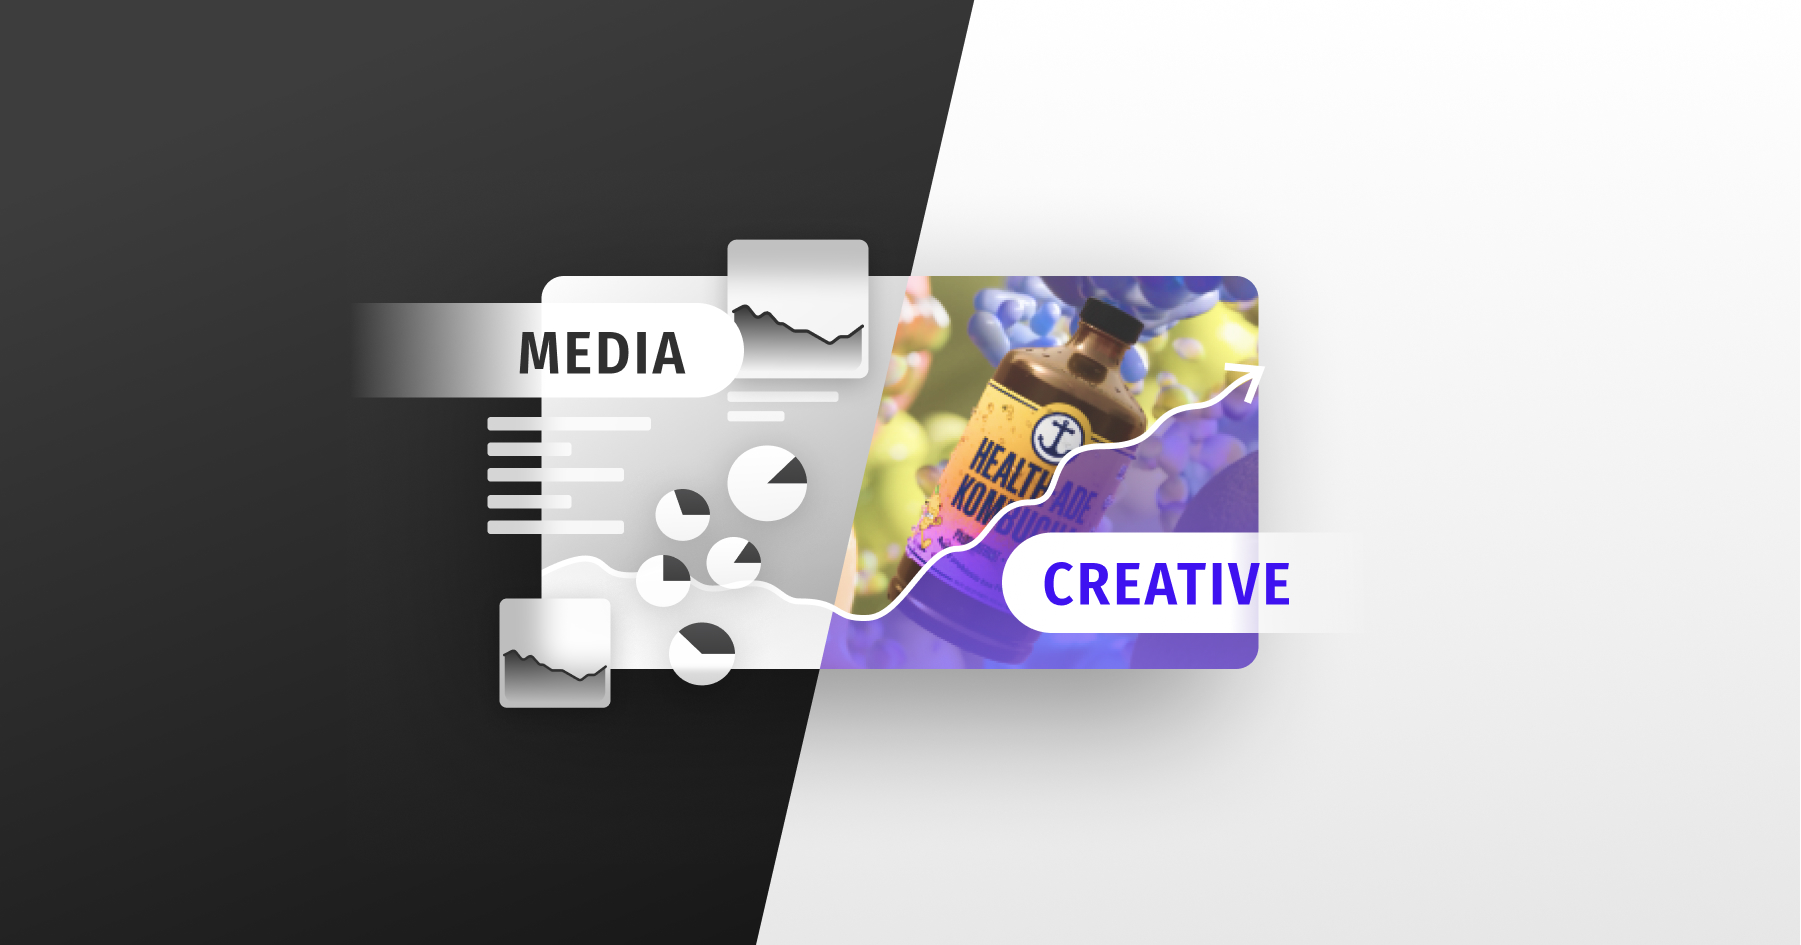 Creative vs media performance